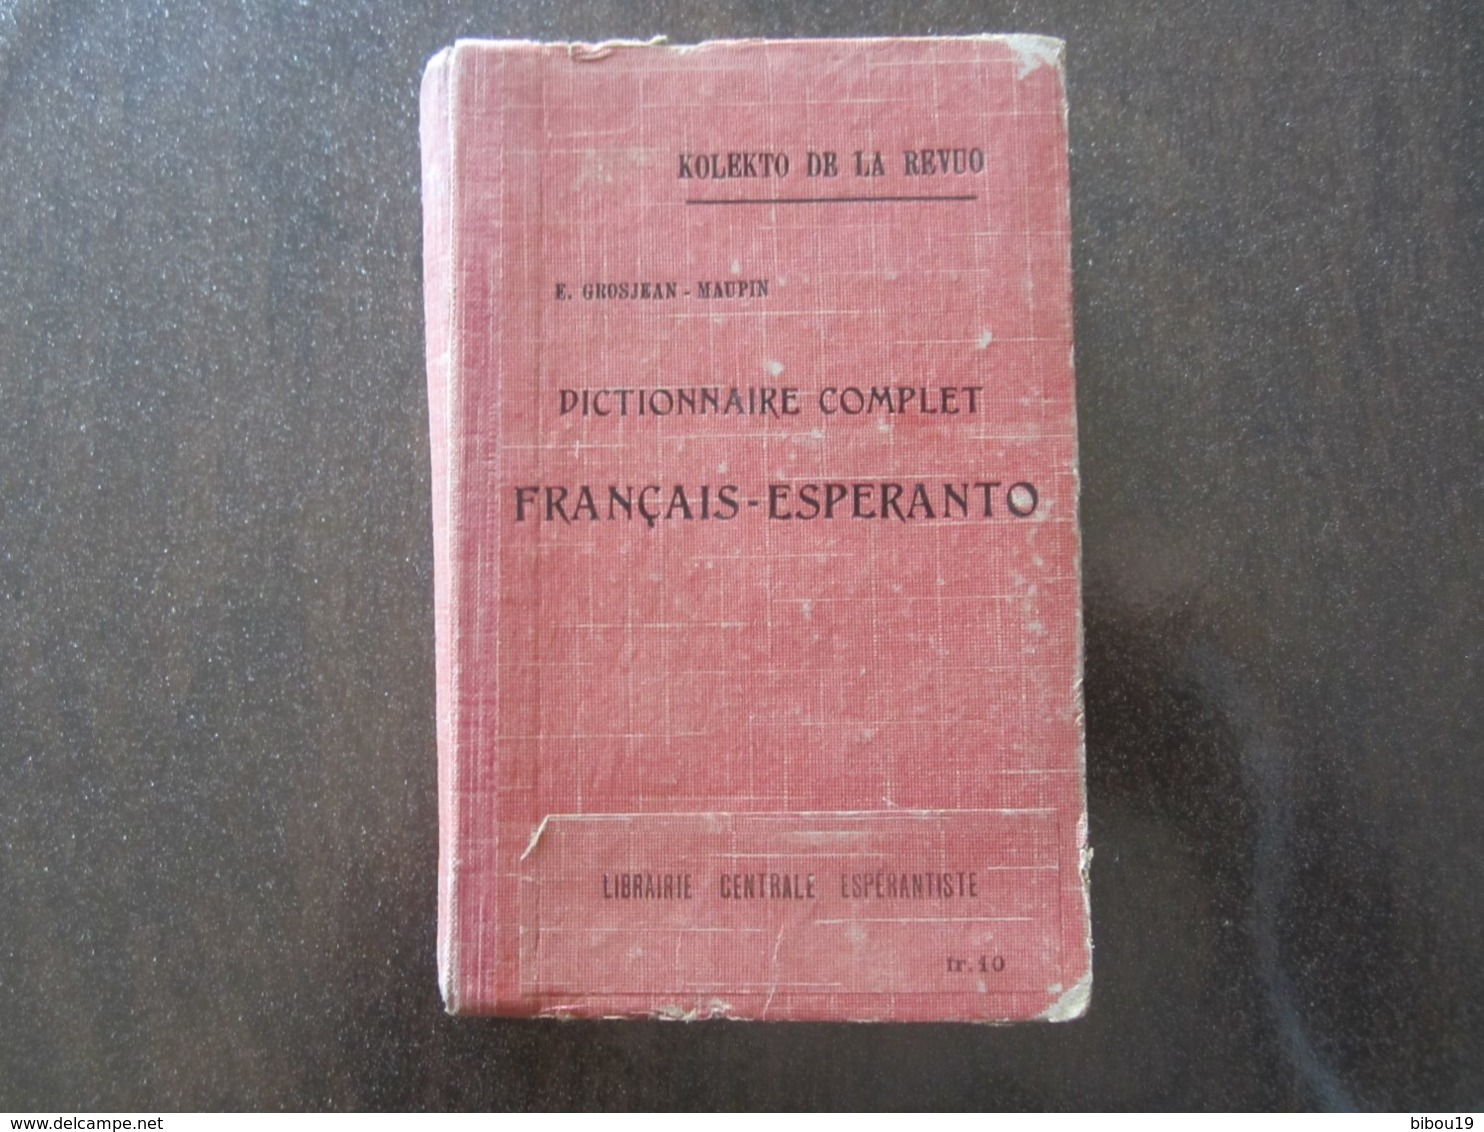 DICTIONNAIRE COMPLET FRANCAIS ESPERANTO  1913  KOLEKTO DE LA REVUO - Dictionaries